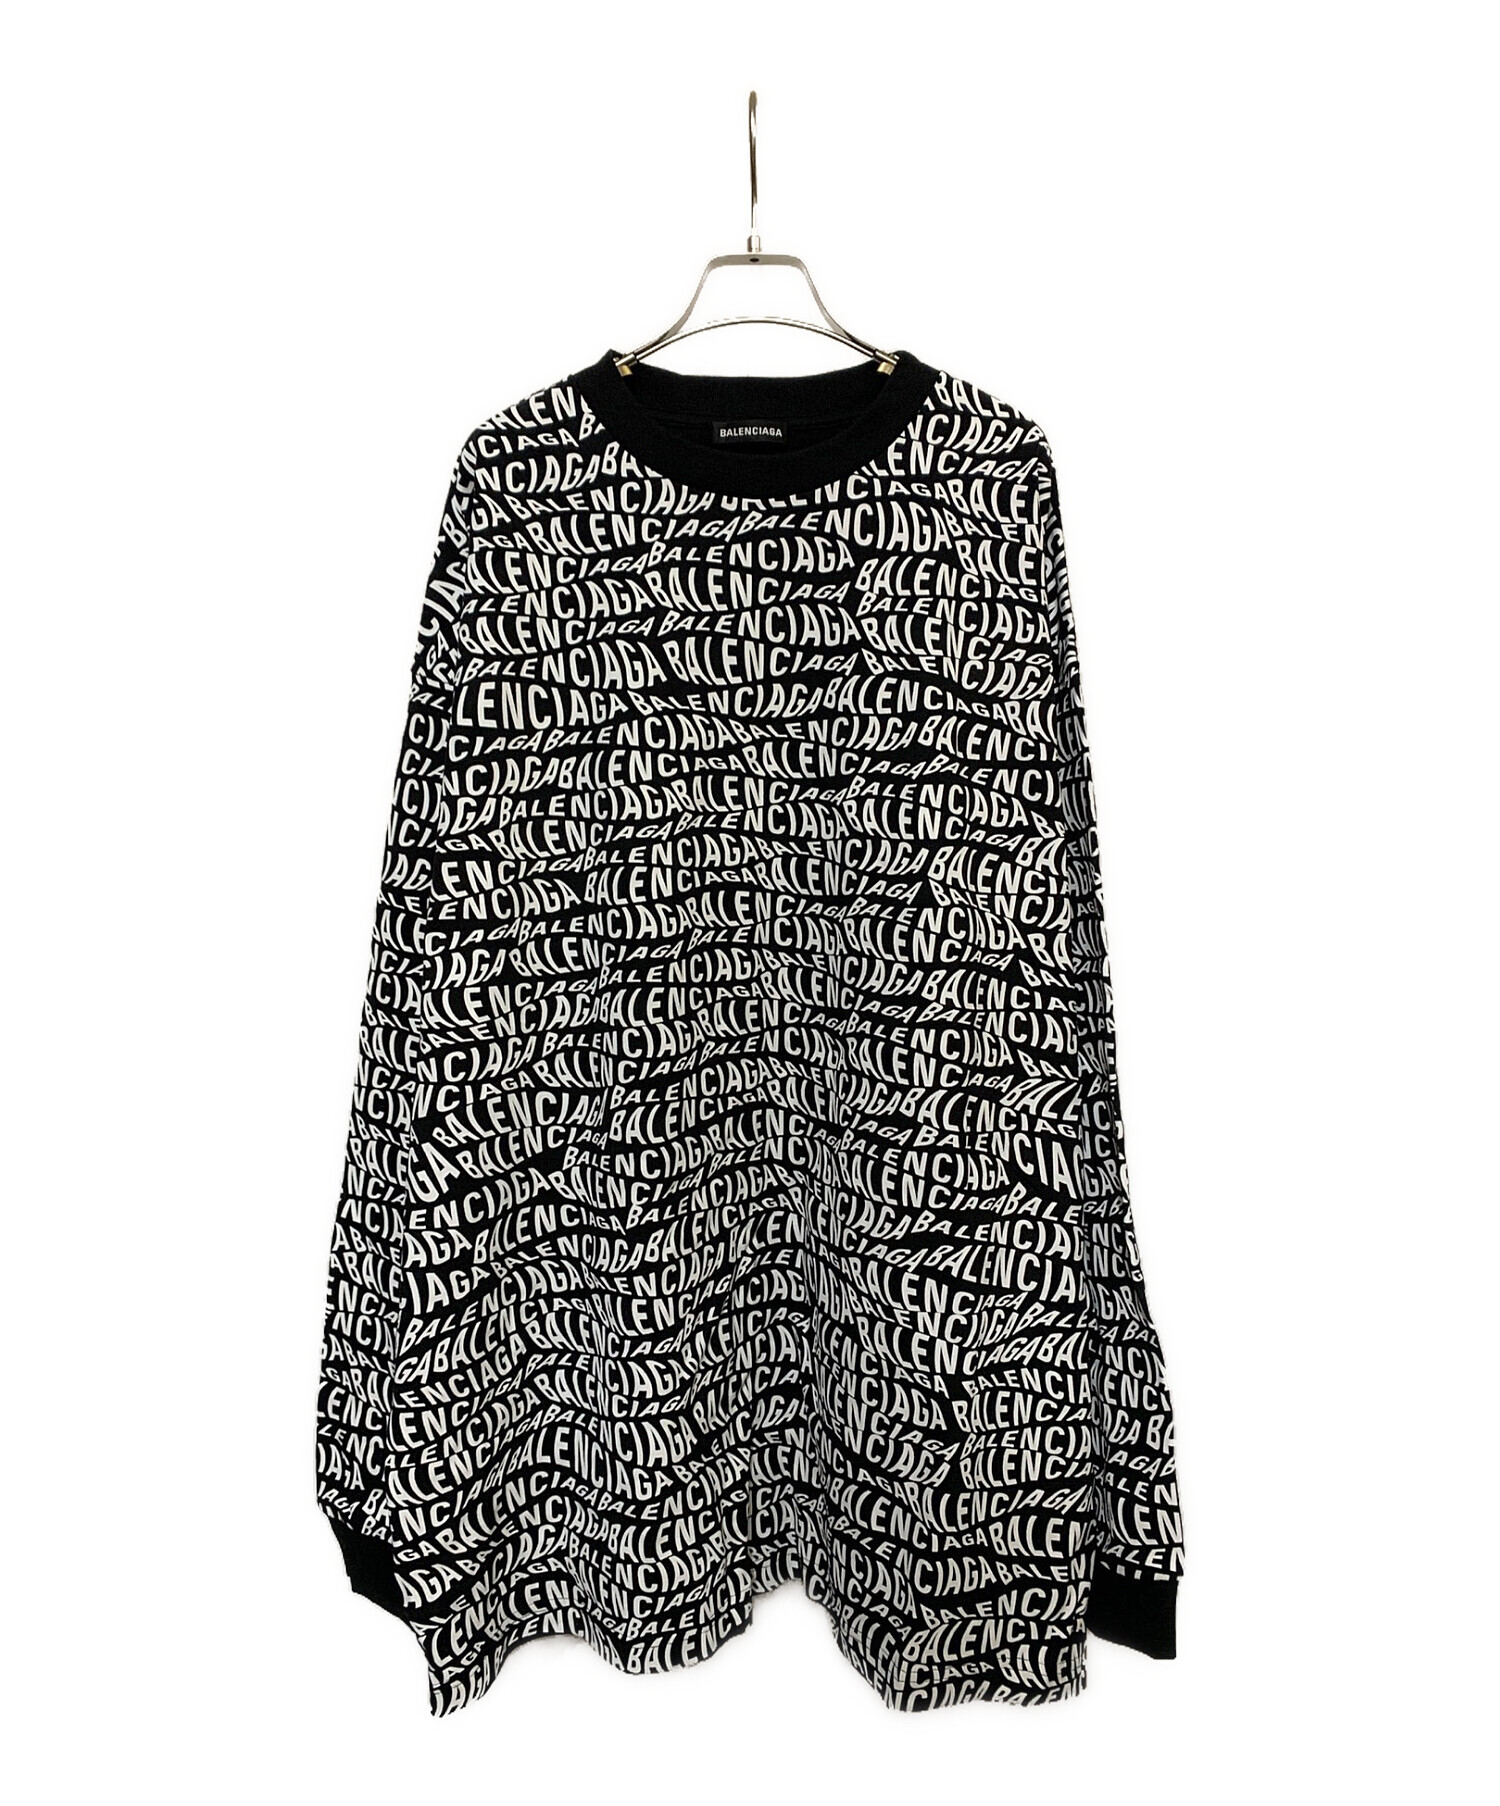 BALENCIAGA (バレンシアガ) ウェーブロゴロングスリーブTシャツ ブラック サイズ:M